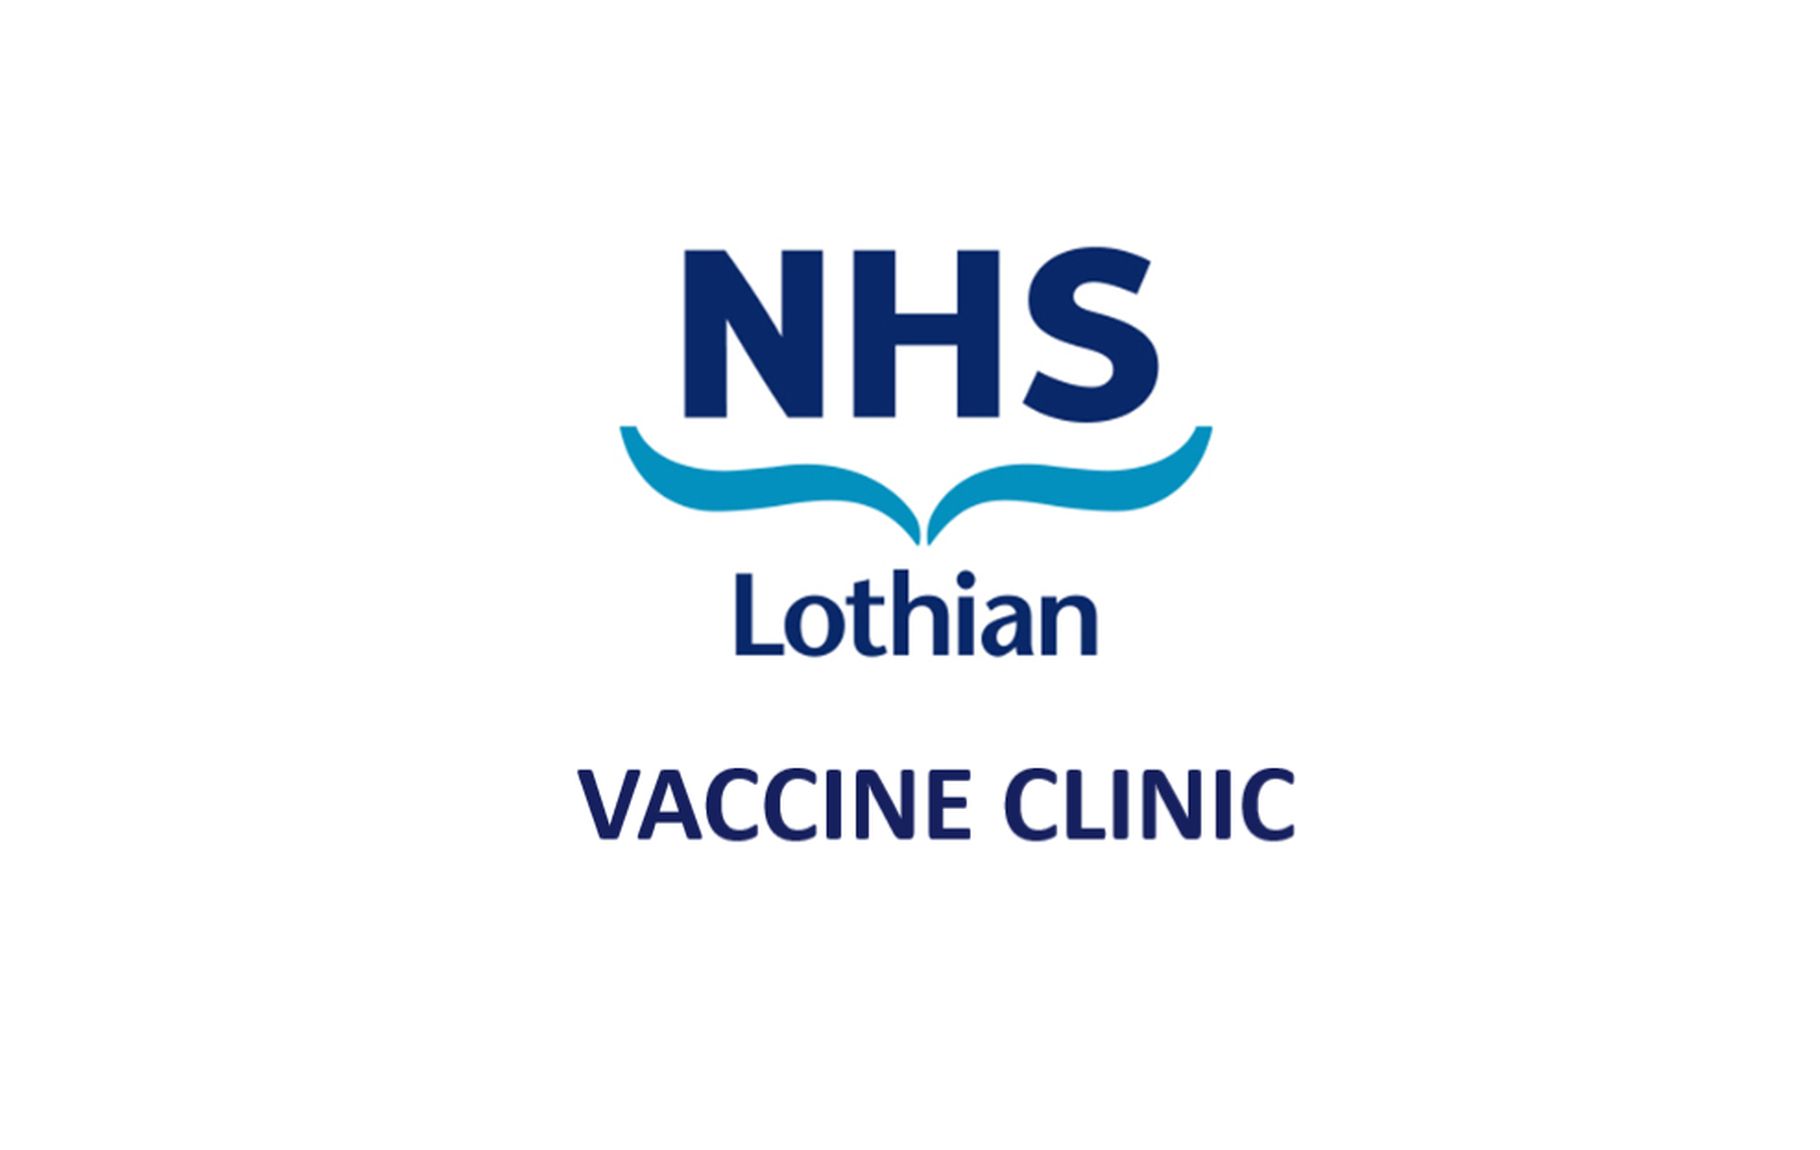 NHS Lothian Vaccine Clinic